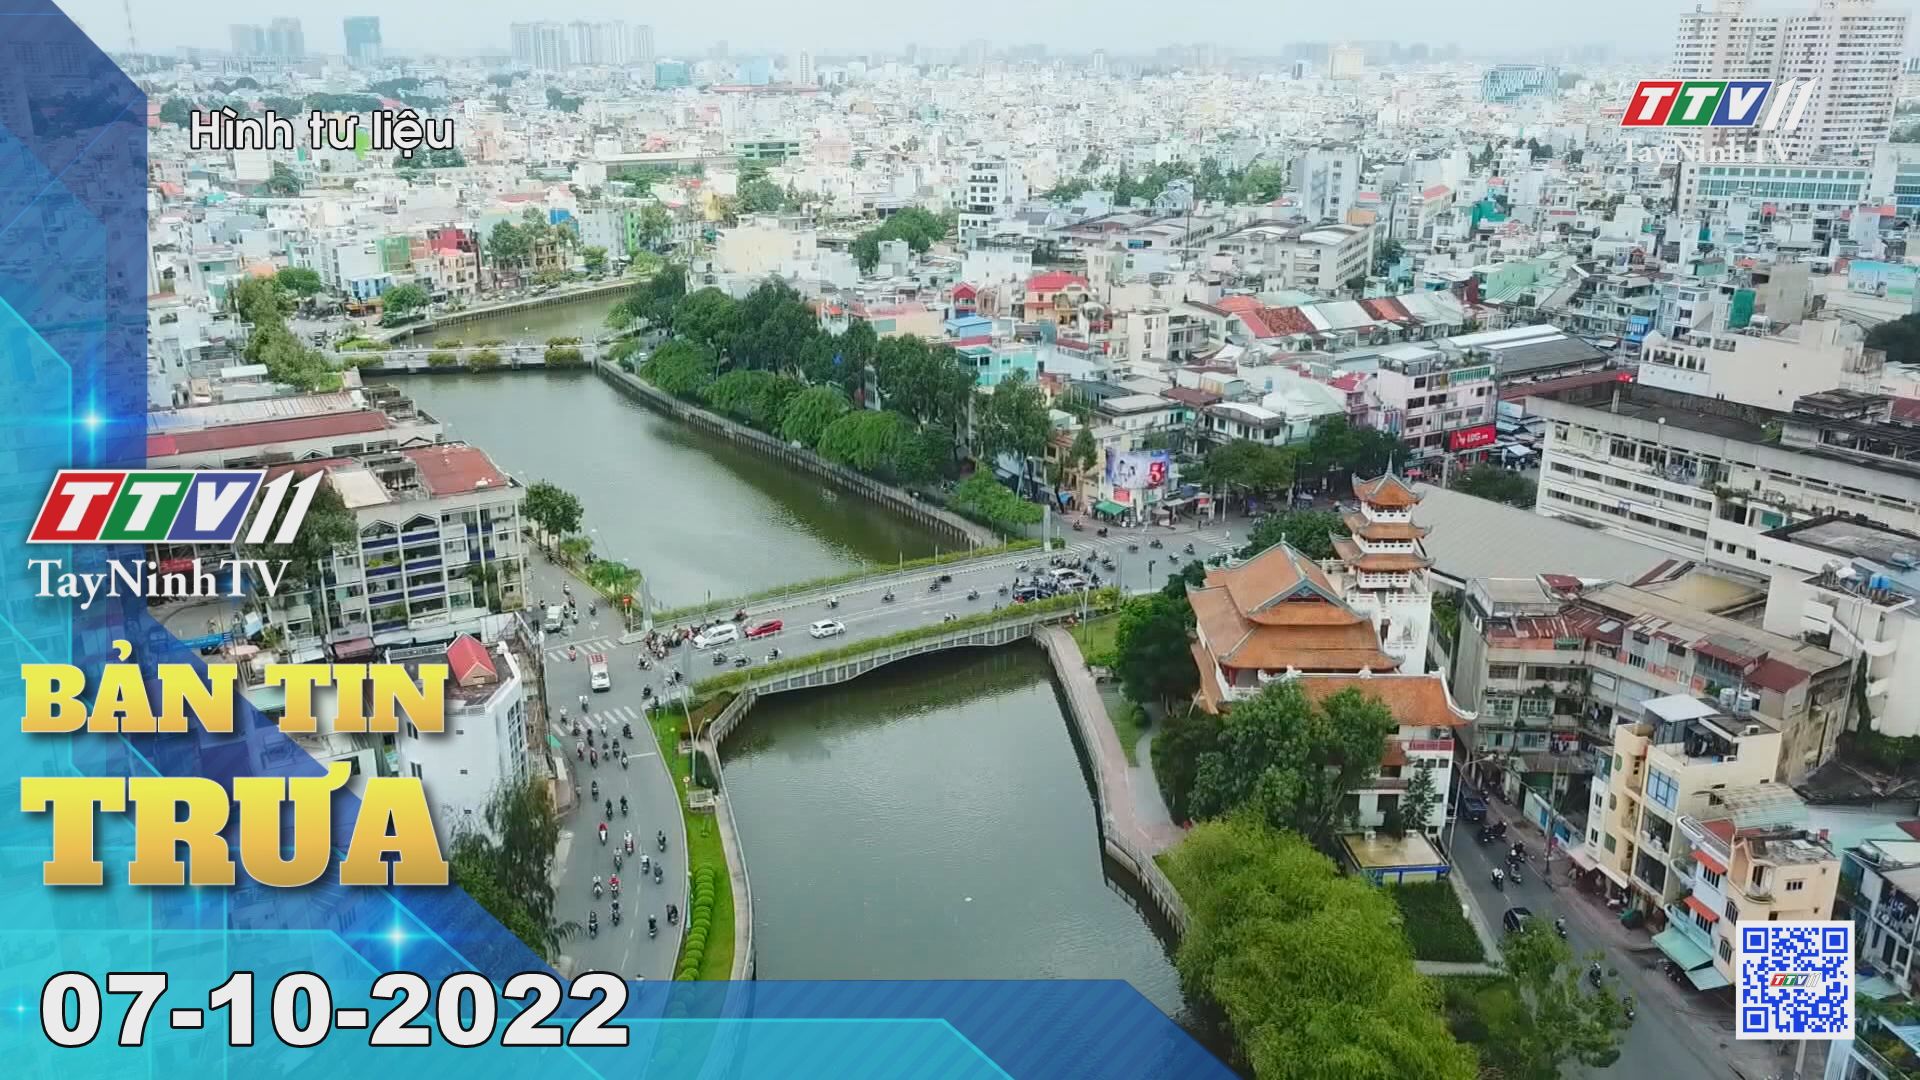 Bản tin trưa 07-10-2022 | Tin tức hôm nay | TayNinhTV